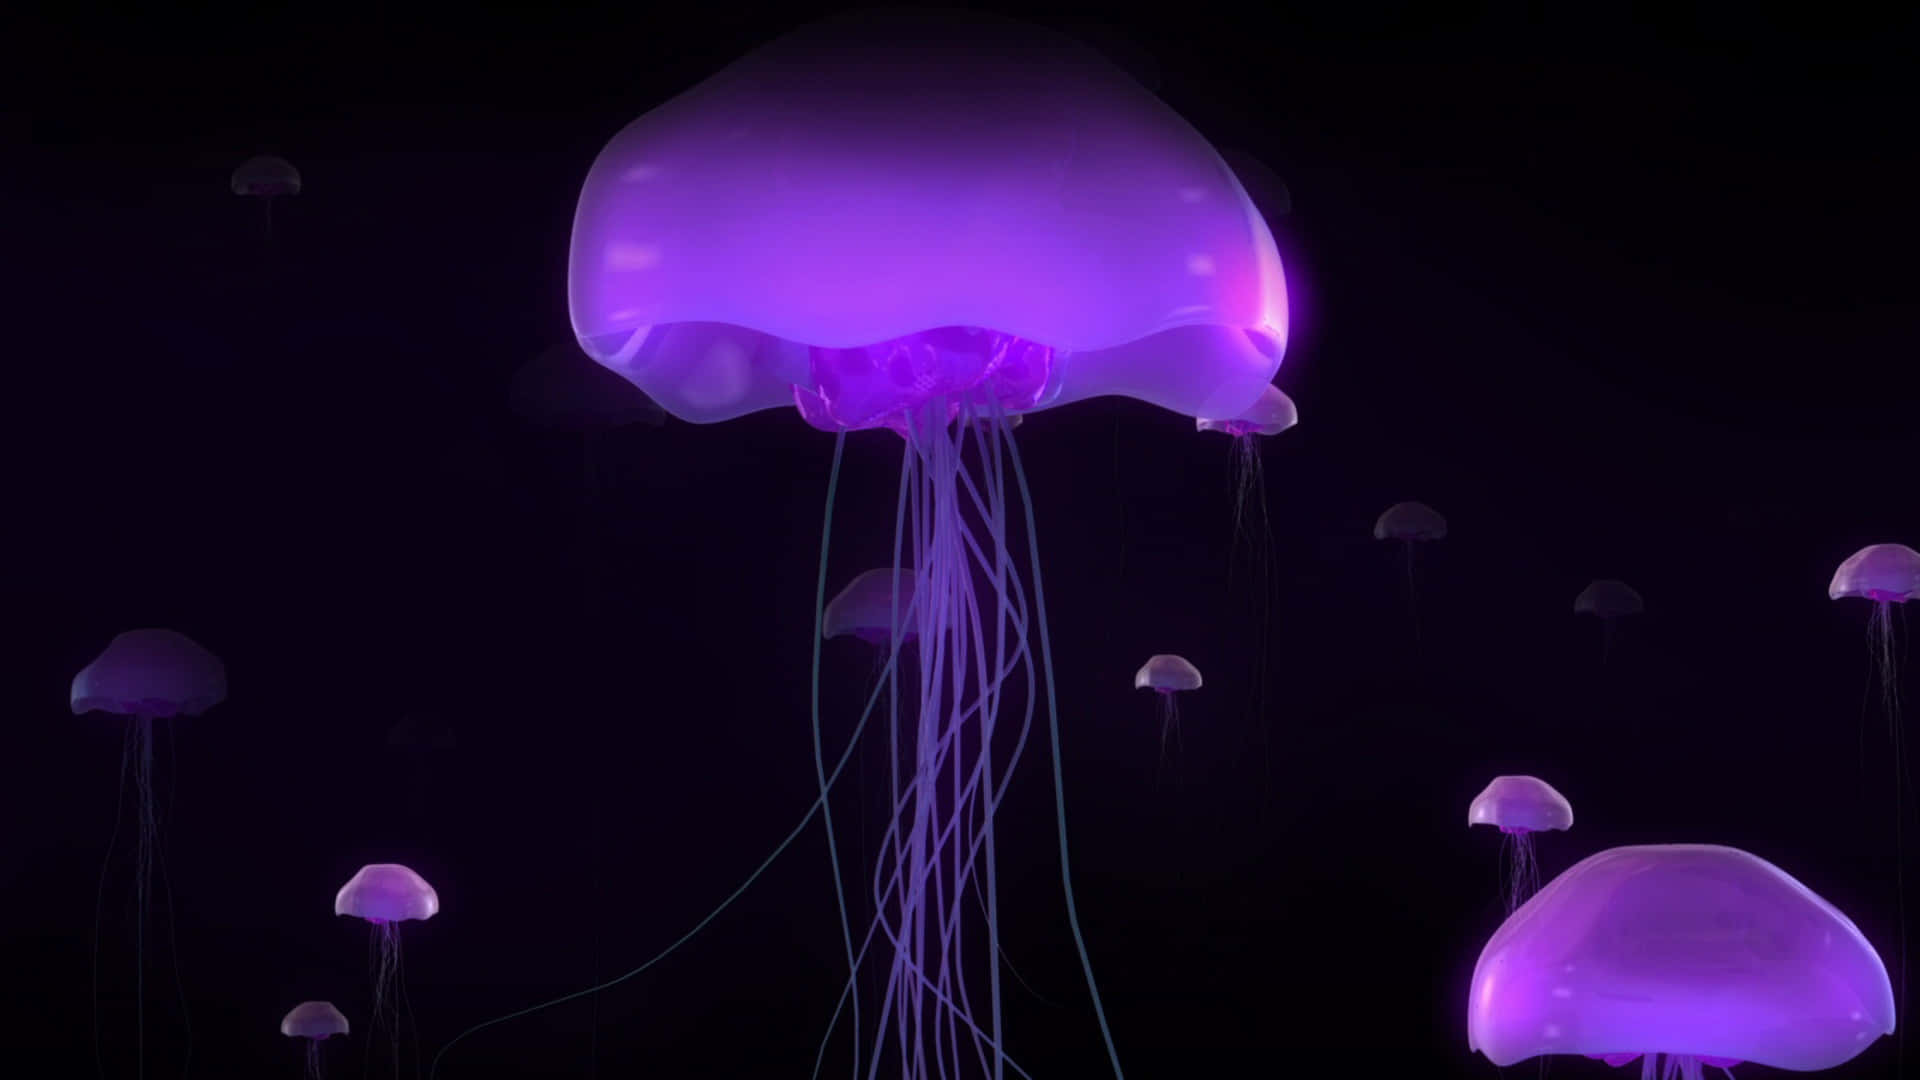 A Stunning Image Of A Beautiful 4k Jellyfish Background